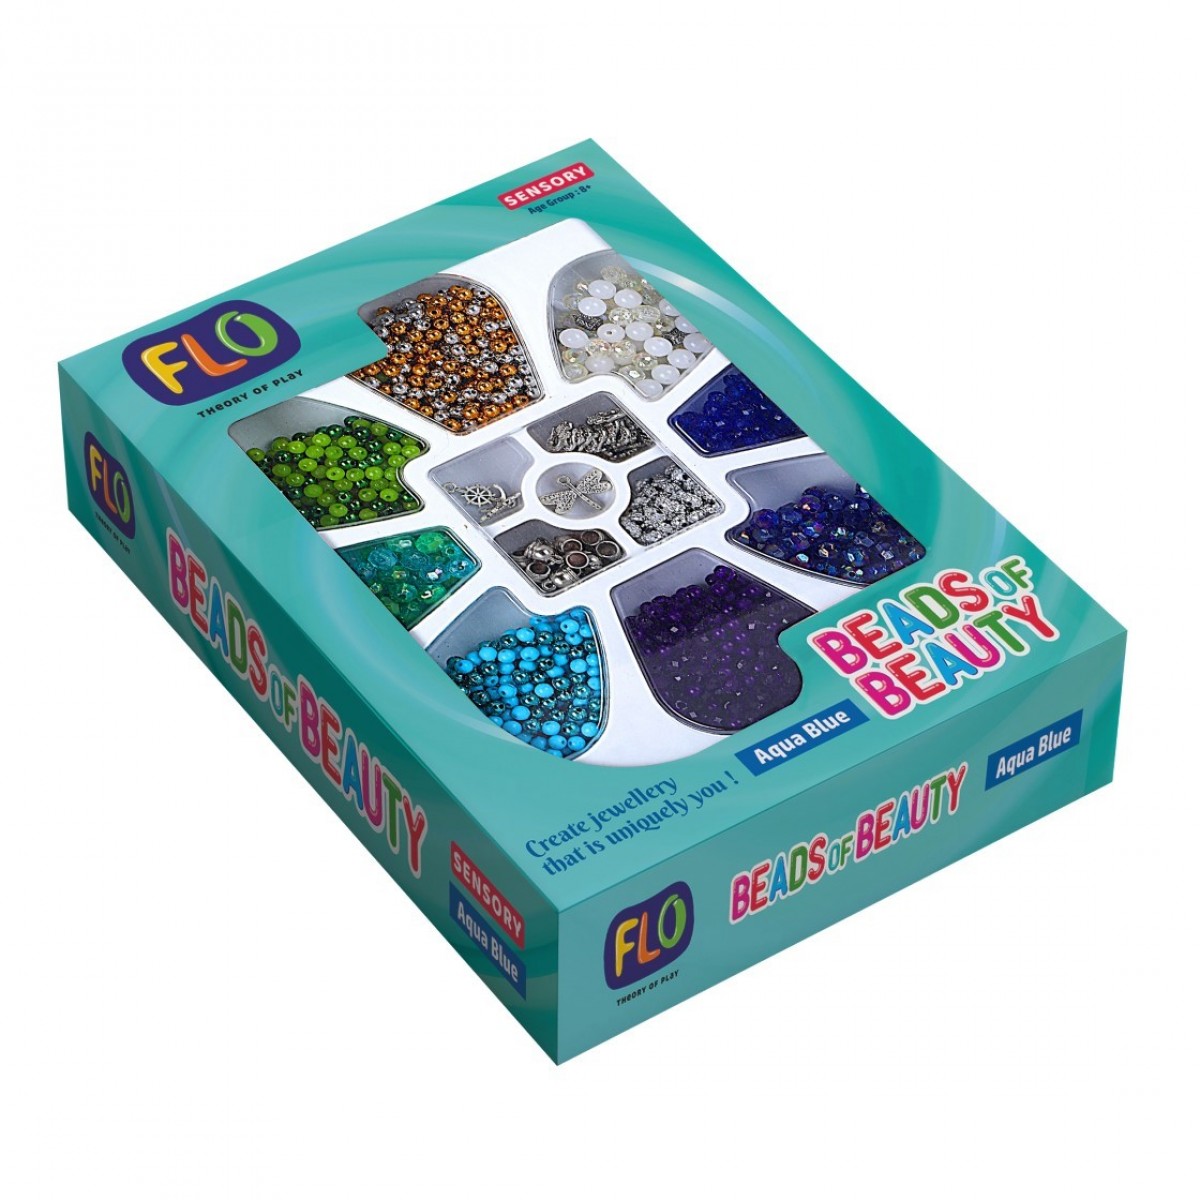 Flo Beads Of Beauty: Aqua Blue DIY fashion kit for kids Multicolour 8Y+